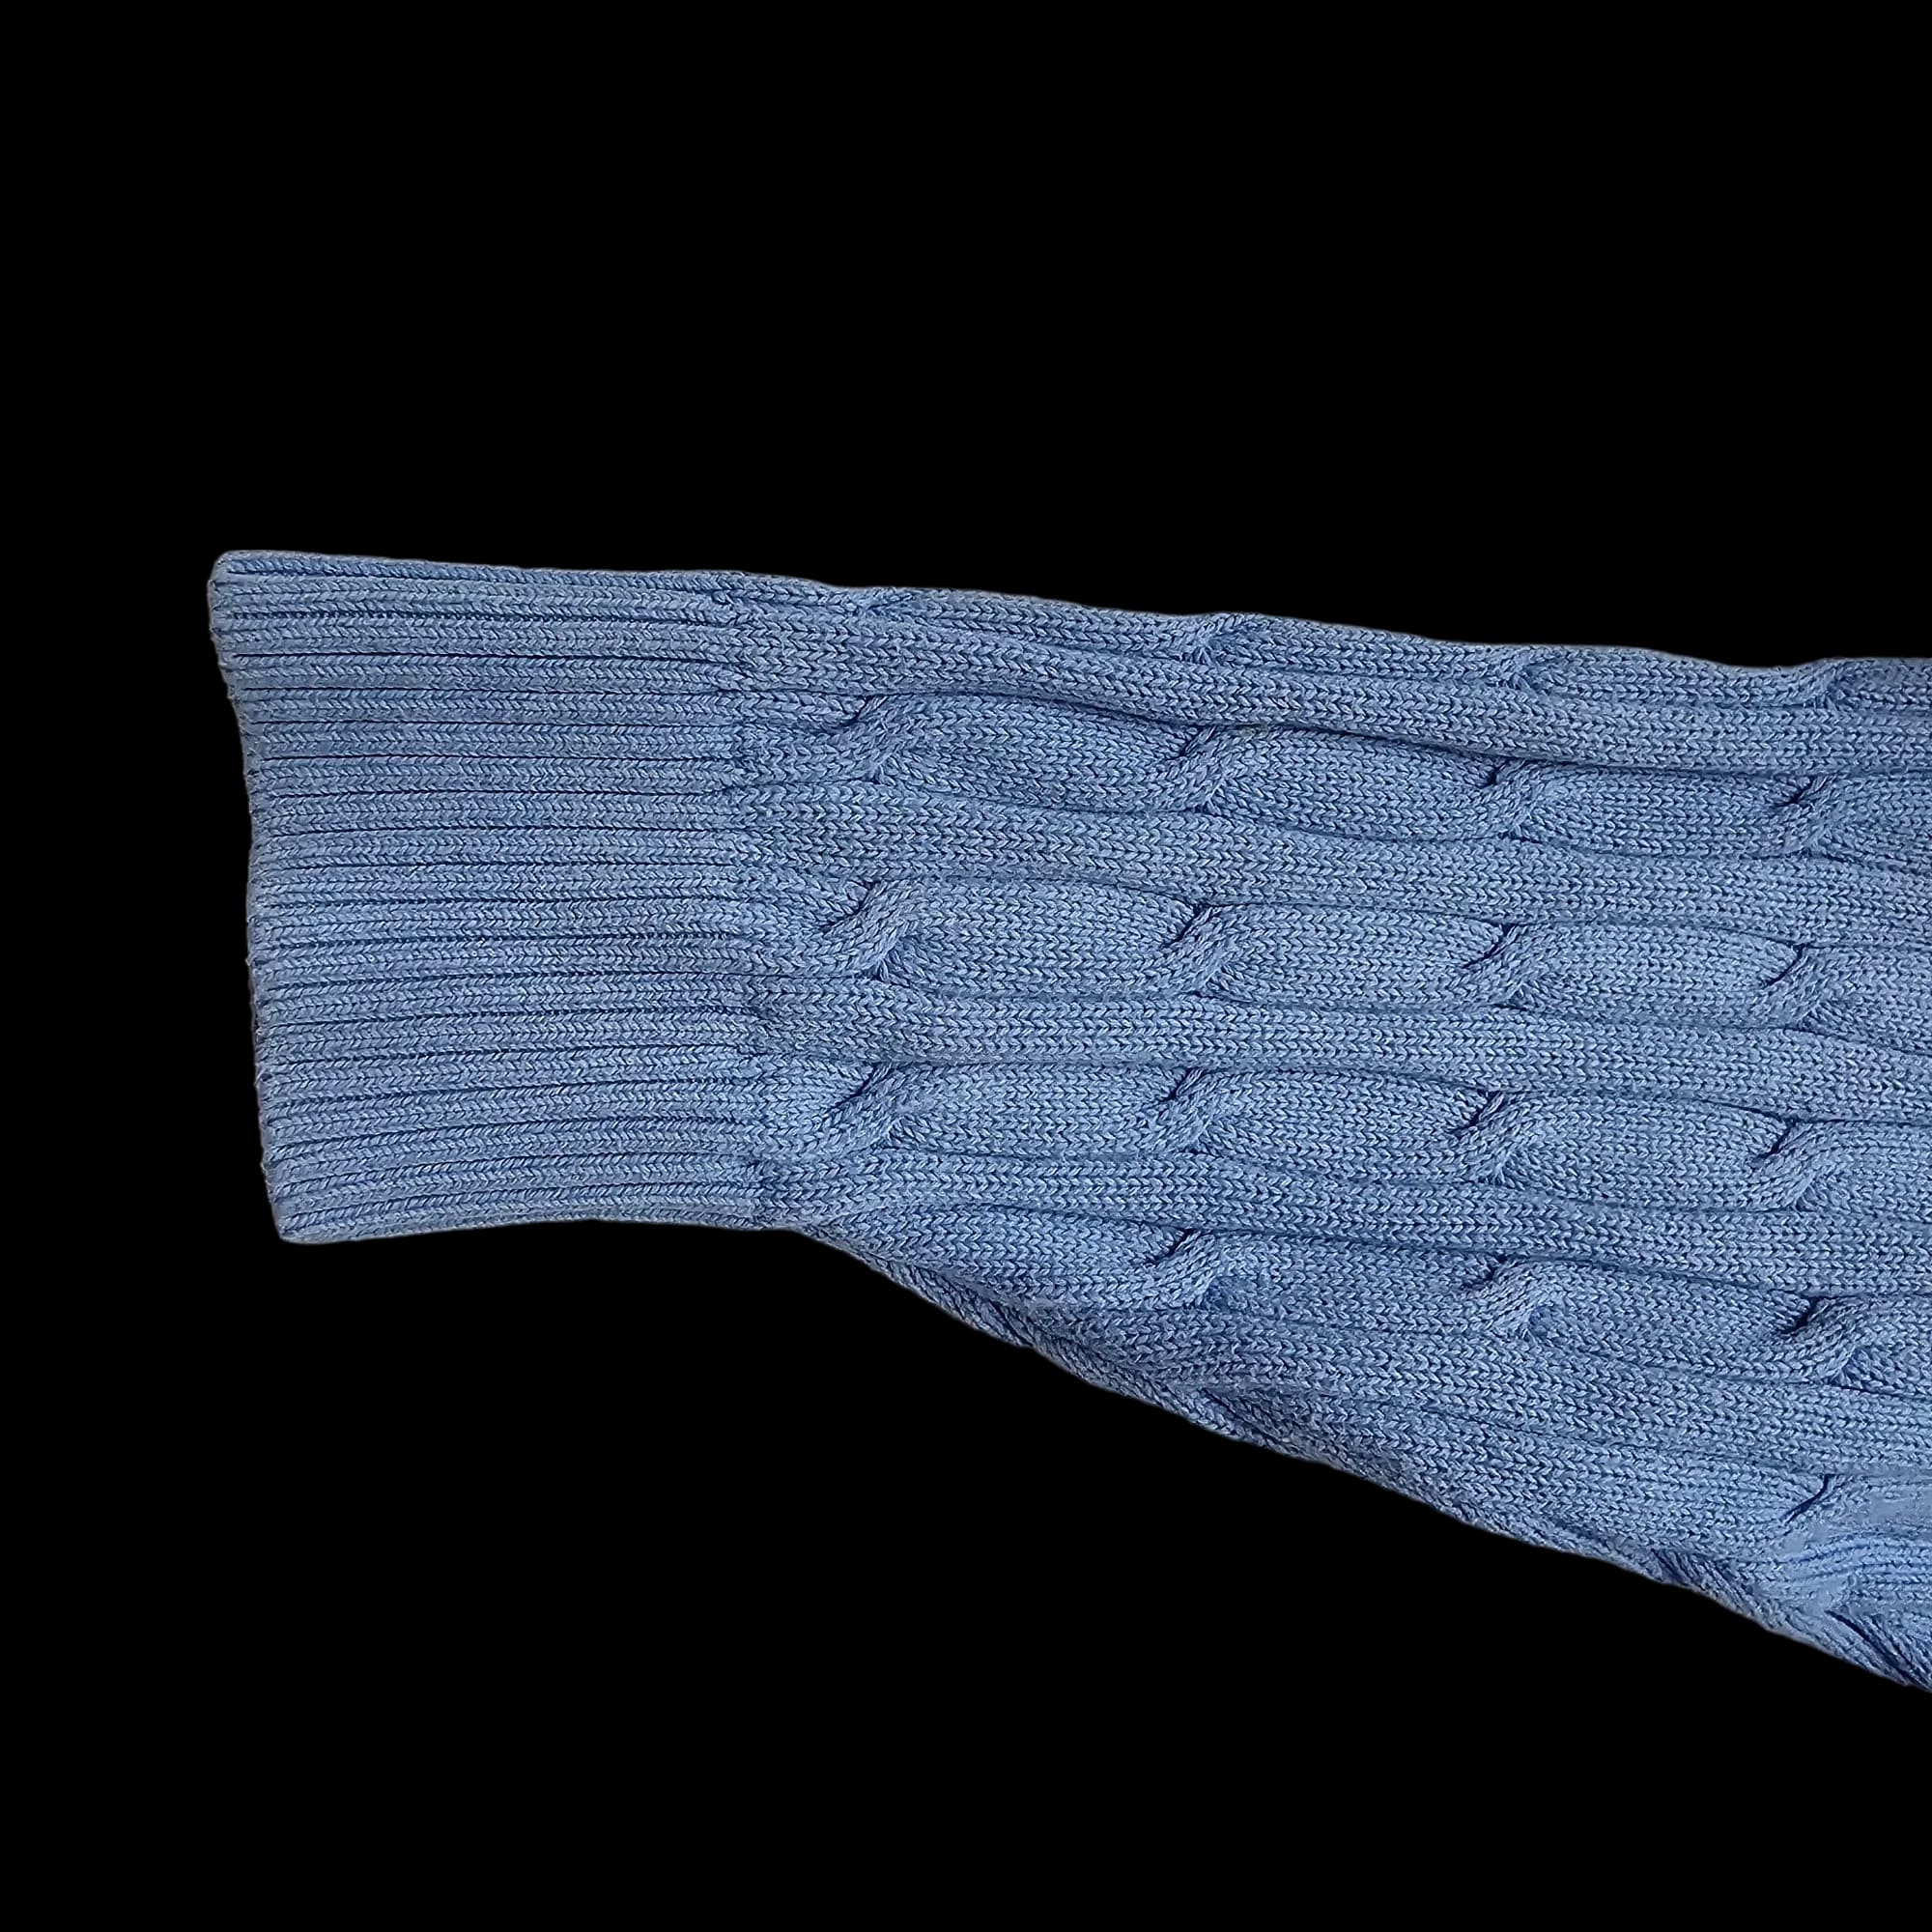 Tommy Hilfiger Golf Unisex Blue Cable-Knit jumper UK XL